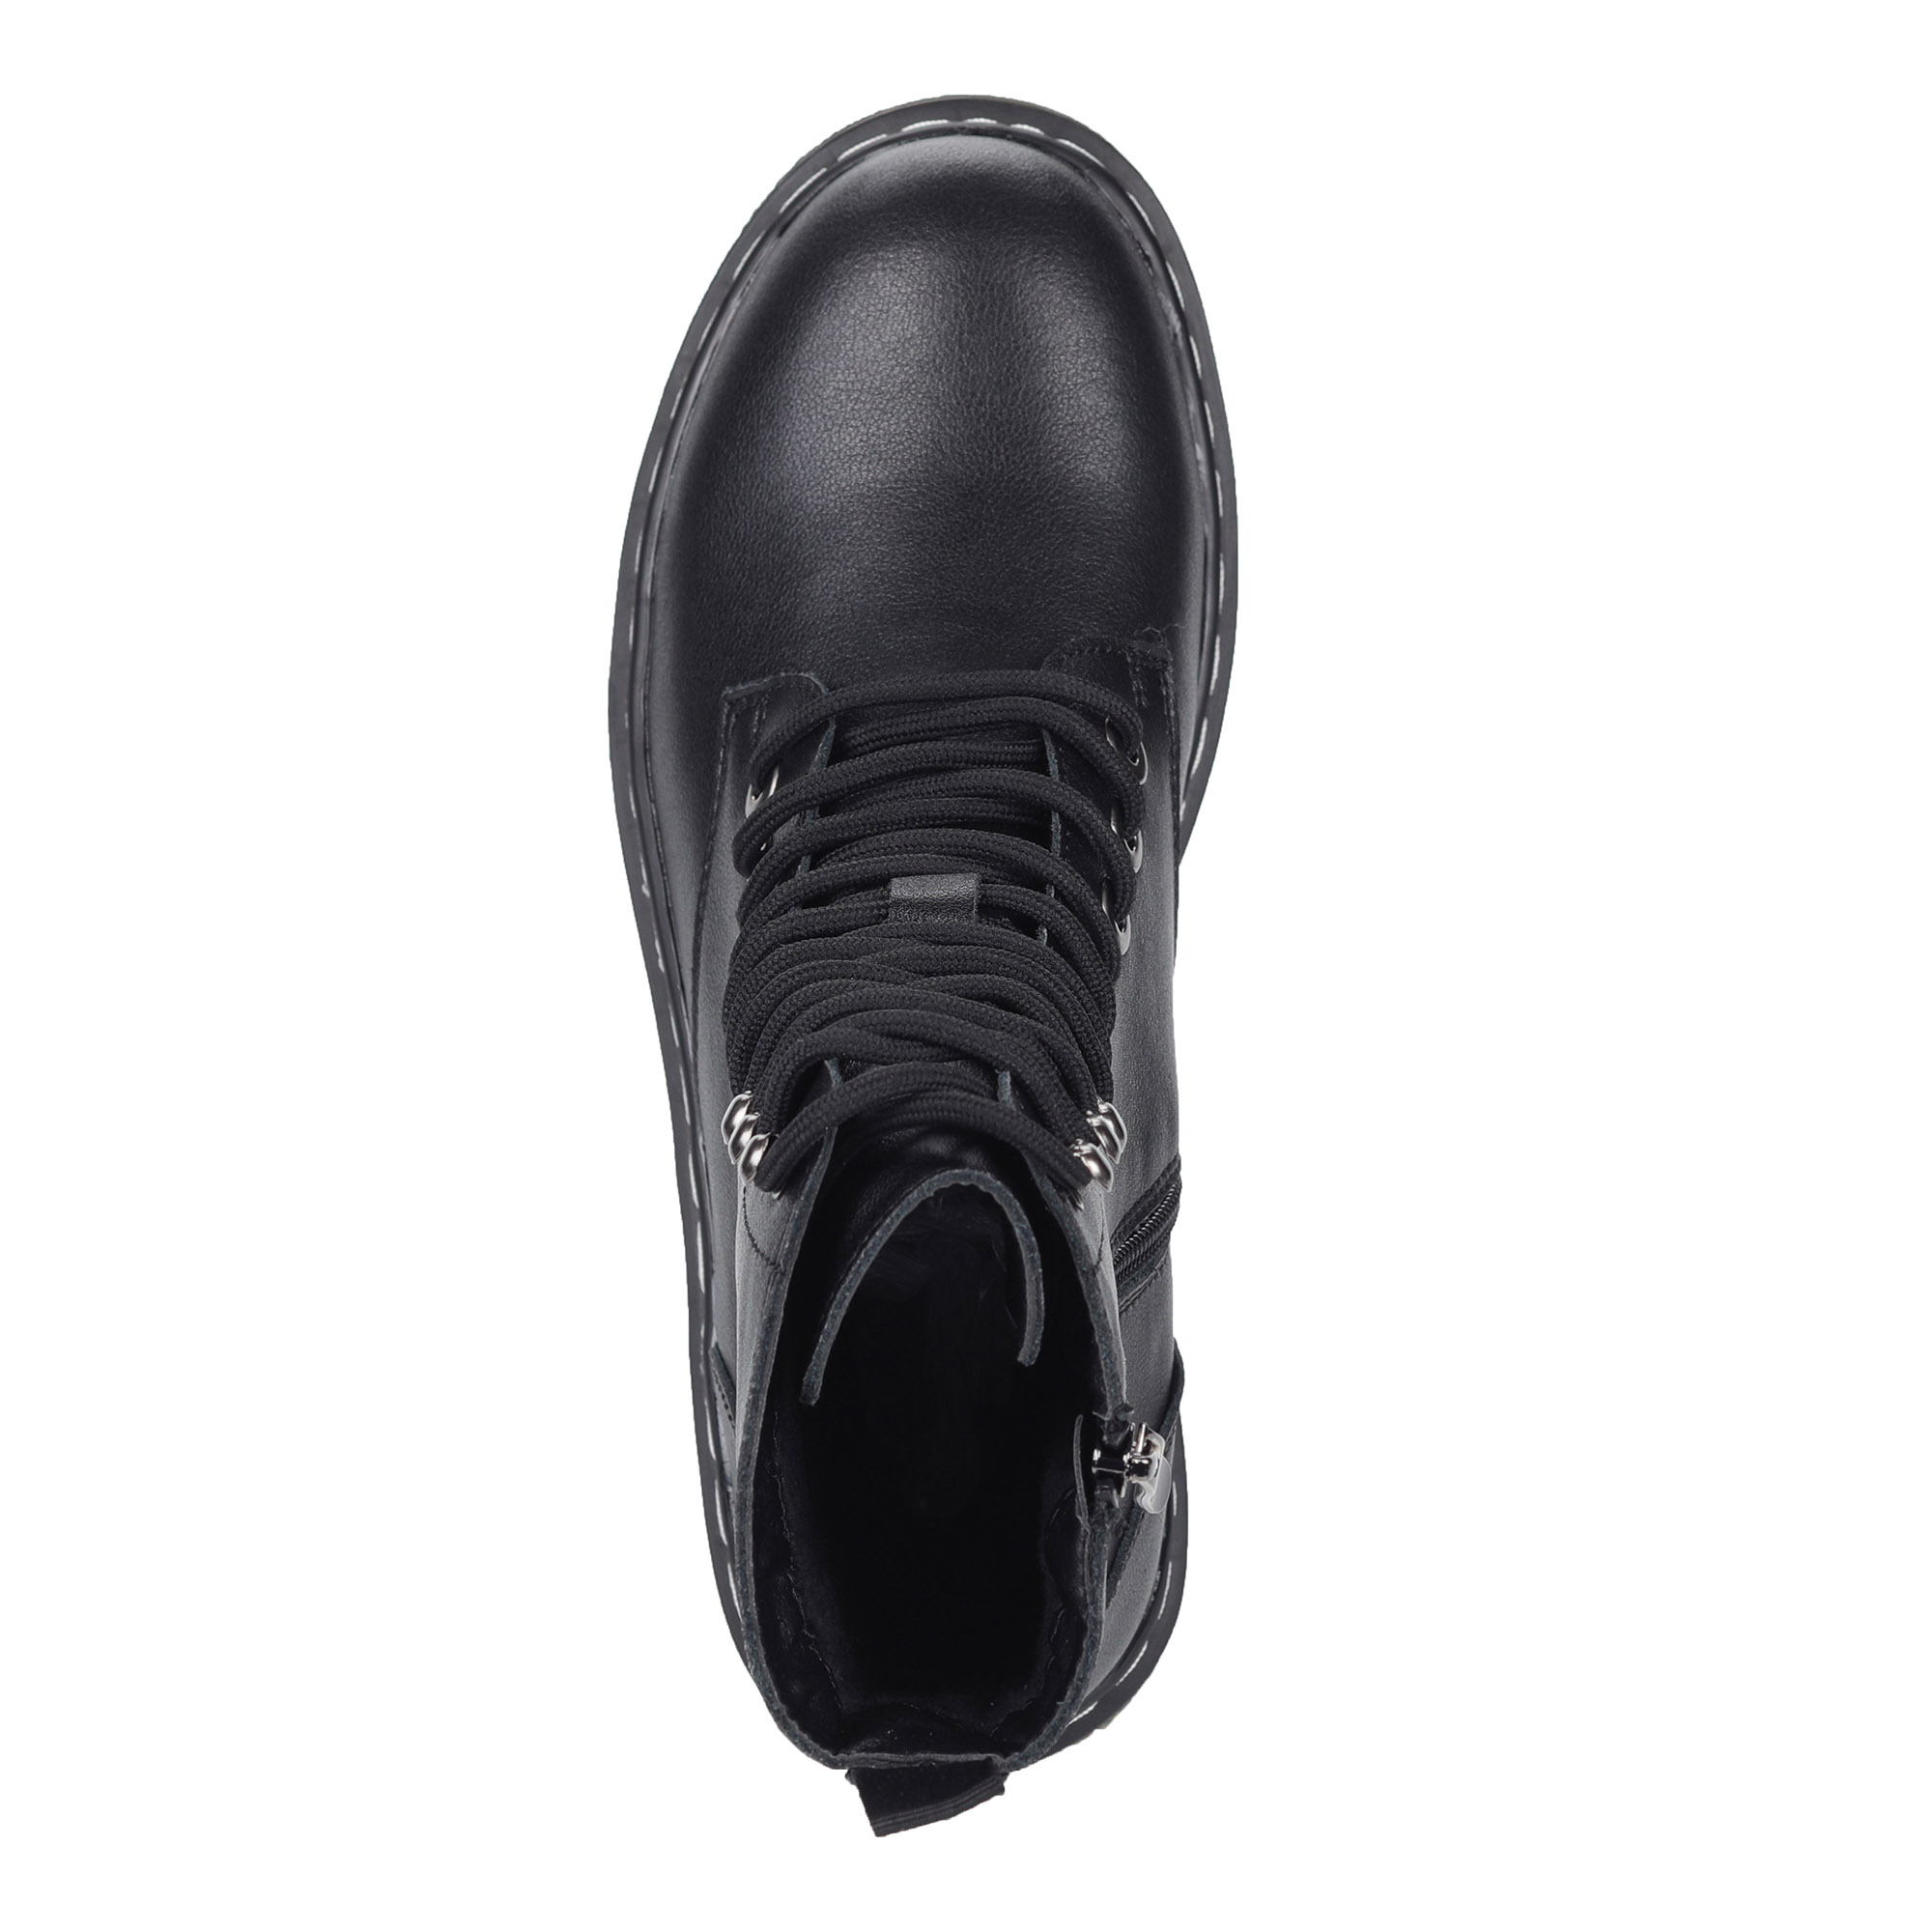 Черные ботинки из кожи на рифленой подошве от Respect-shoes